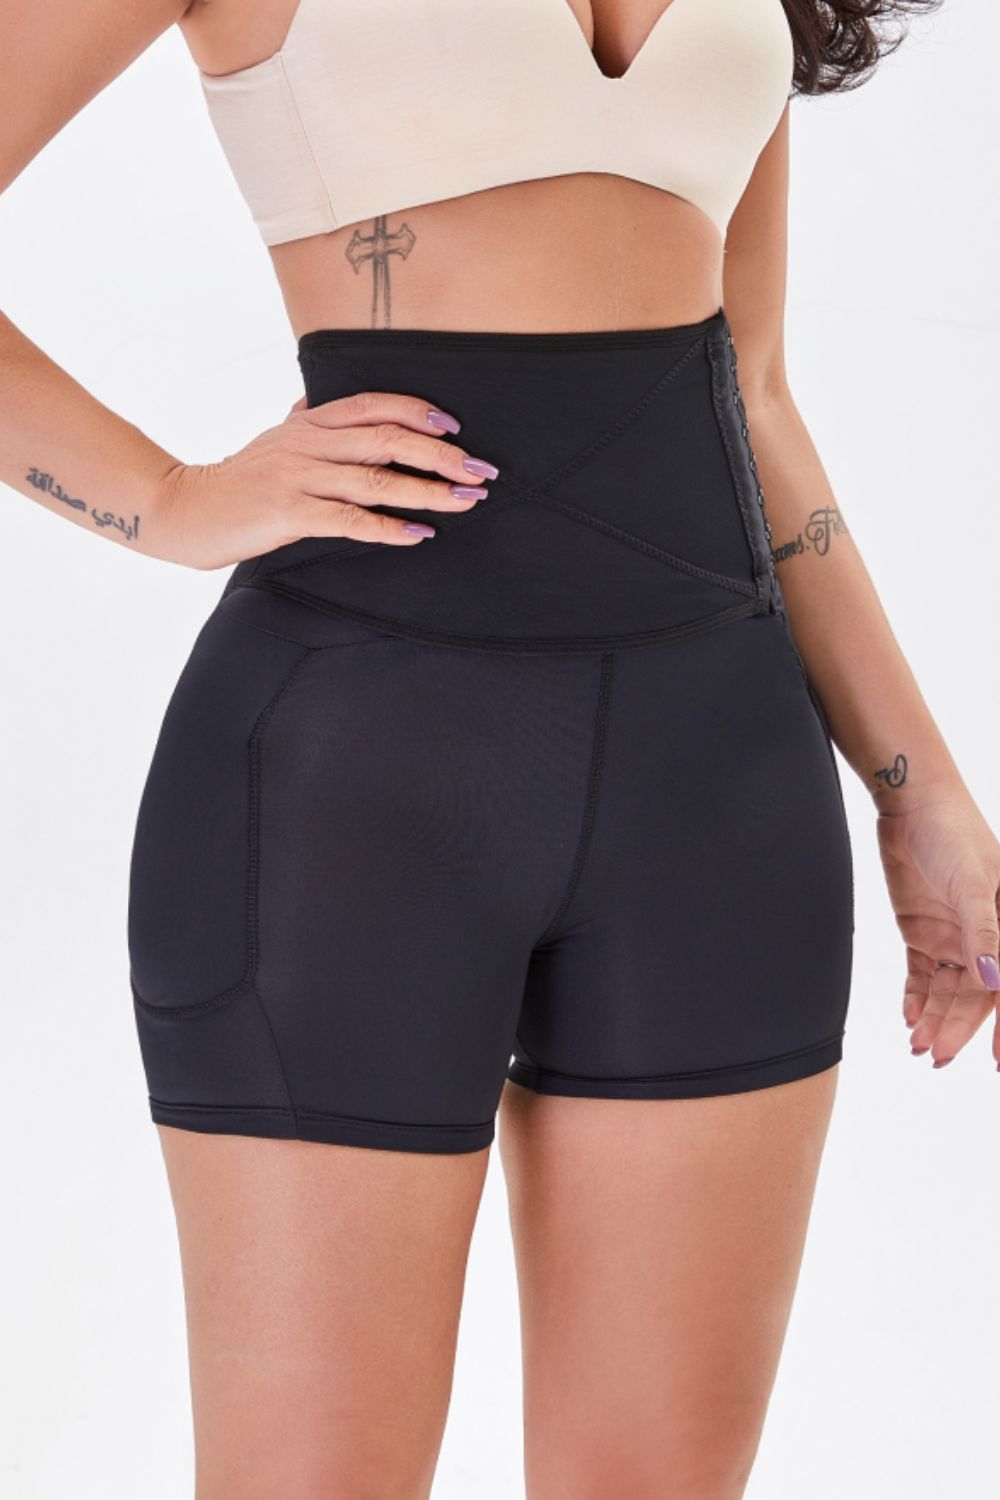 Full Size Hip Lifting Shaping Shorts - BloomBliss.com